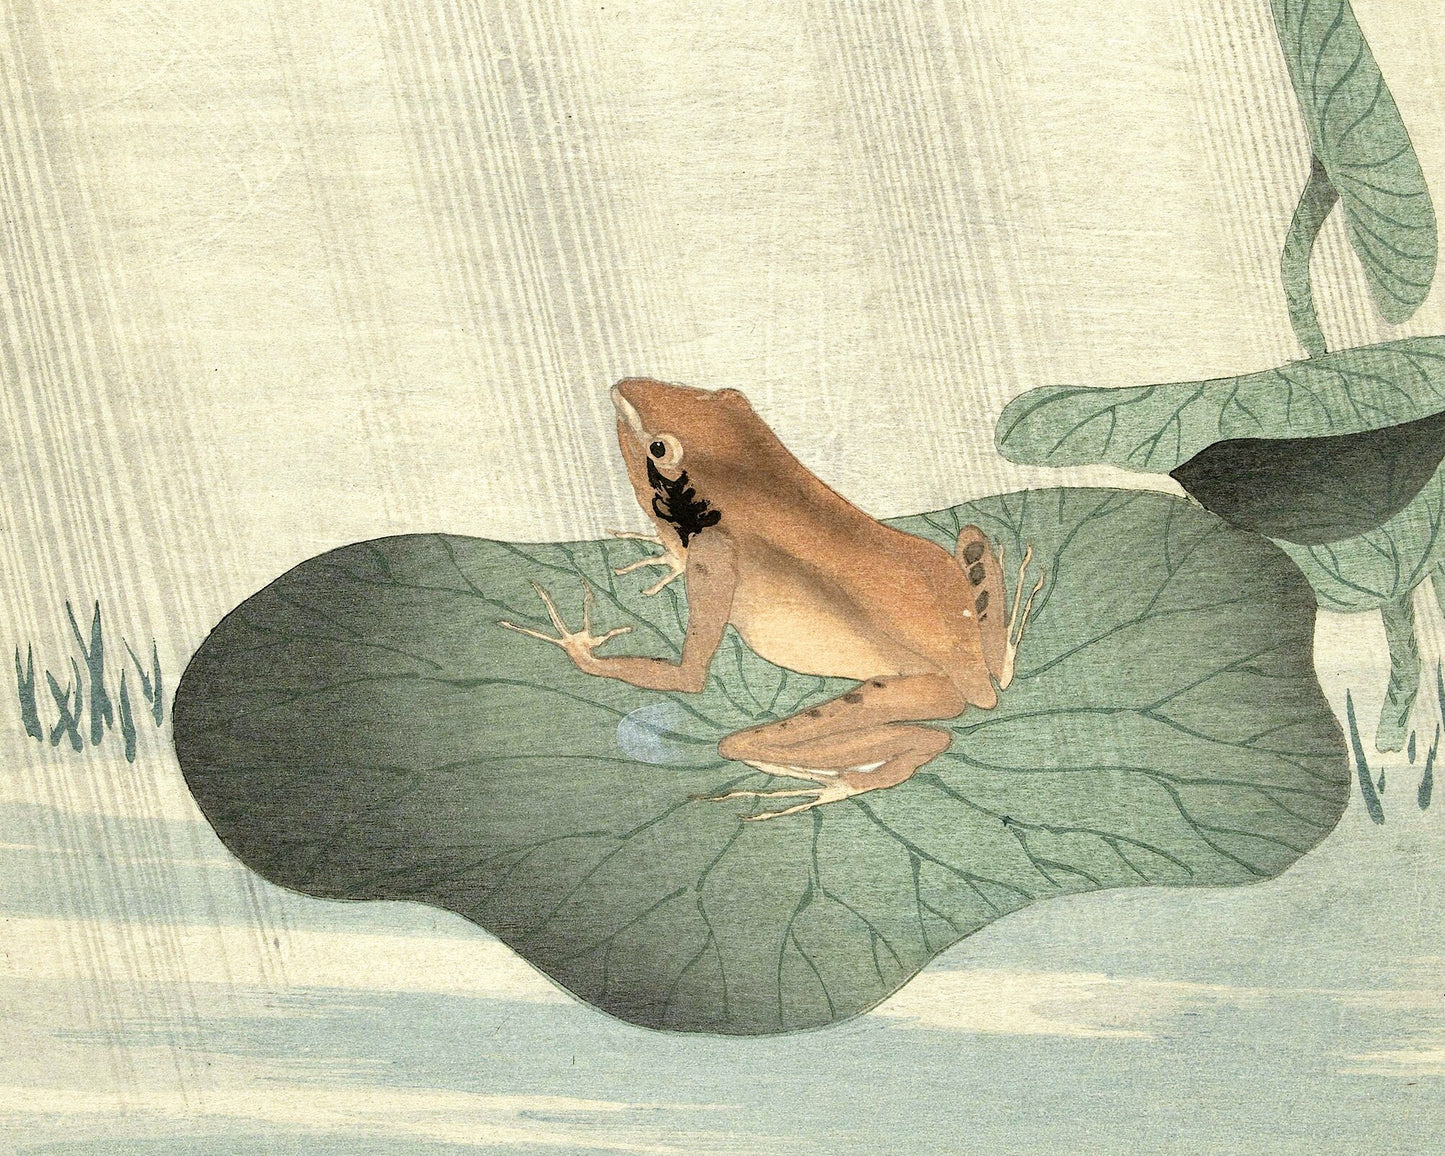 Frog on a Lotus Leaf | Animal wall art | Color woodcut fine art print | Asian water scene | Japanese artist | Ohara Koson